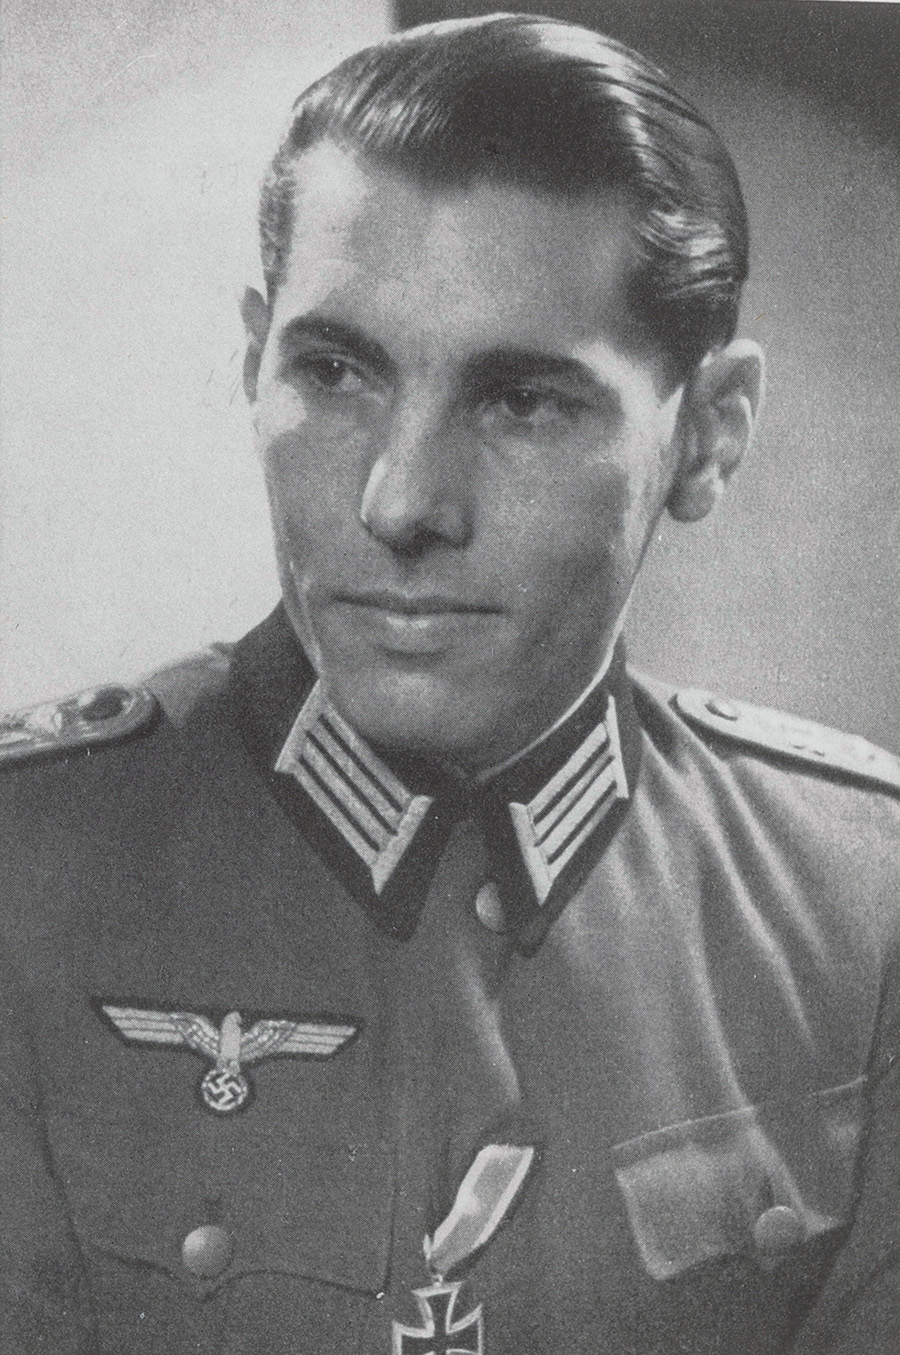 Oberstleutnant i. G. Robert Bernardis